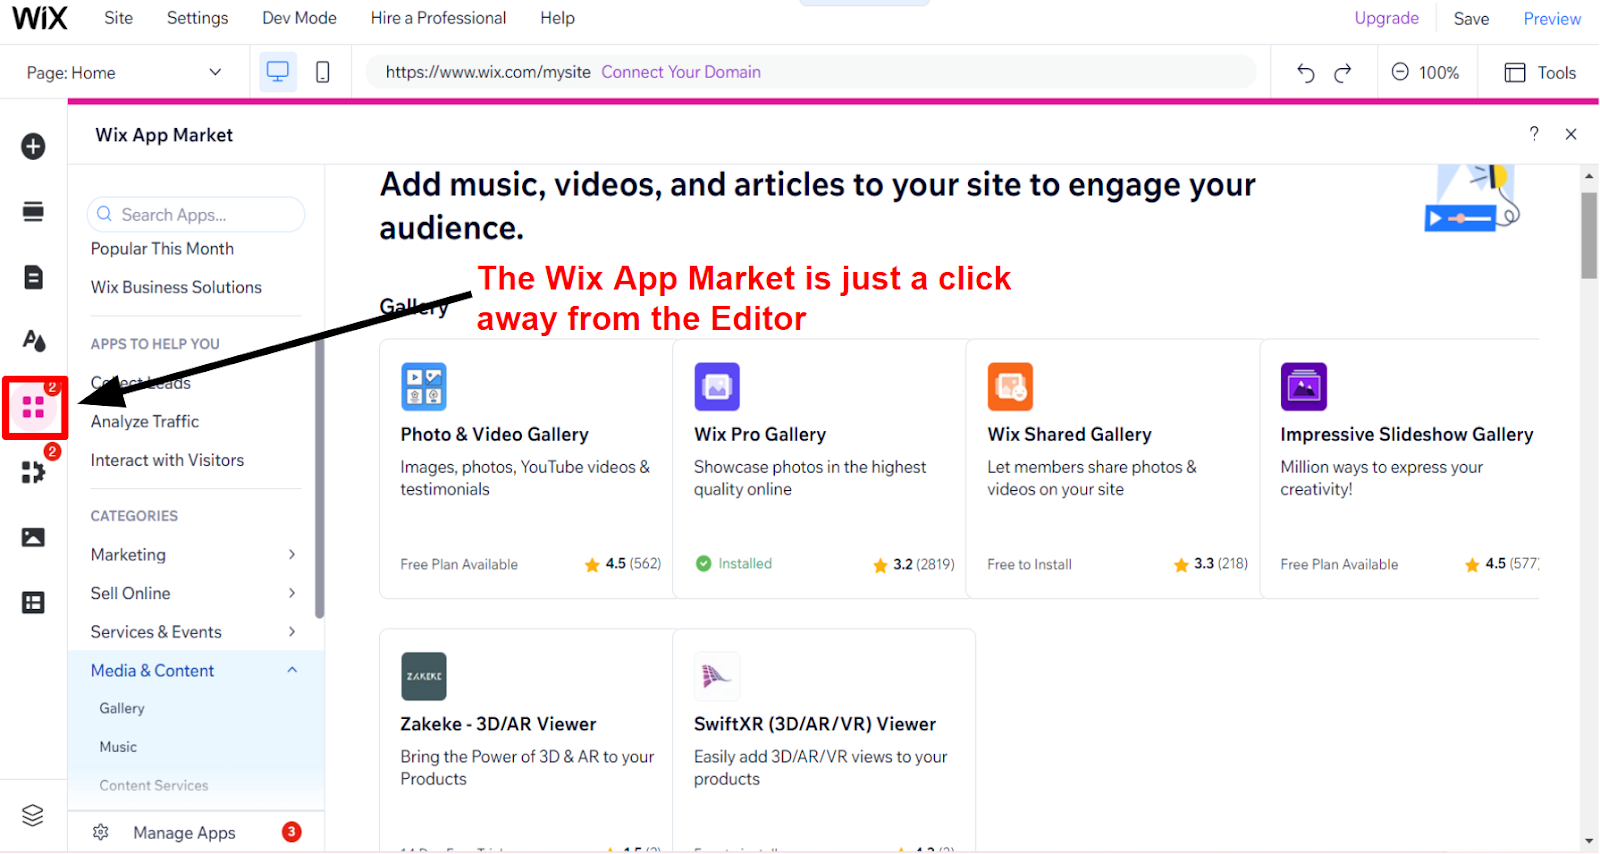 Wix App Market Media & Content apps